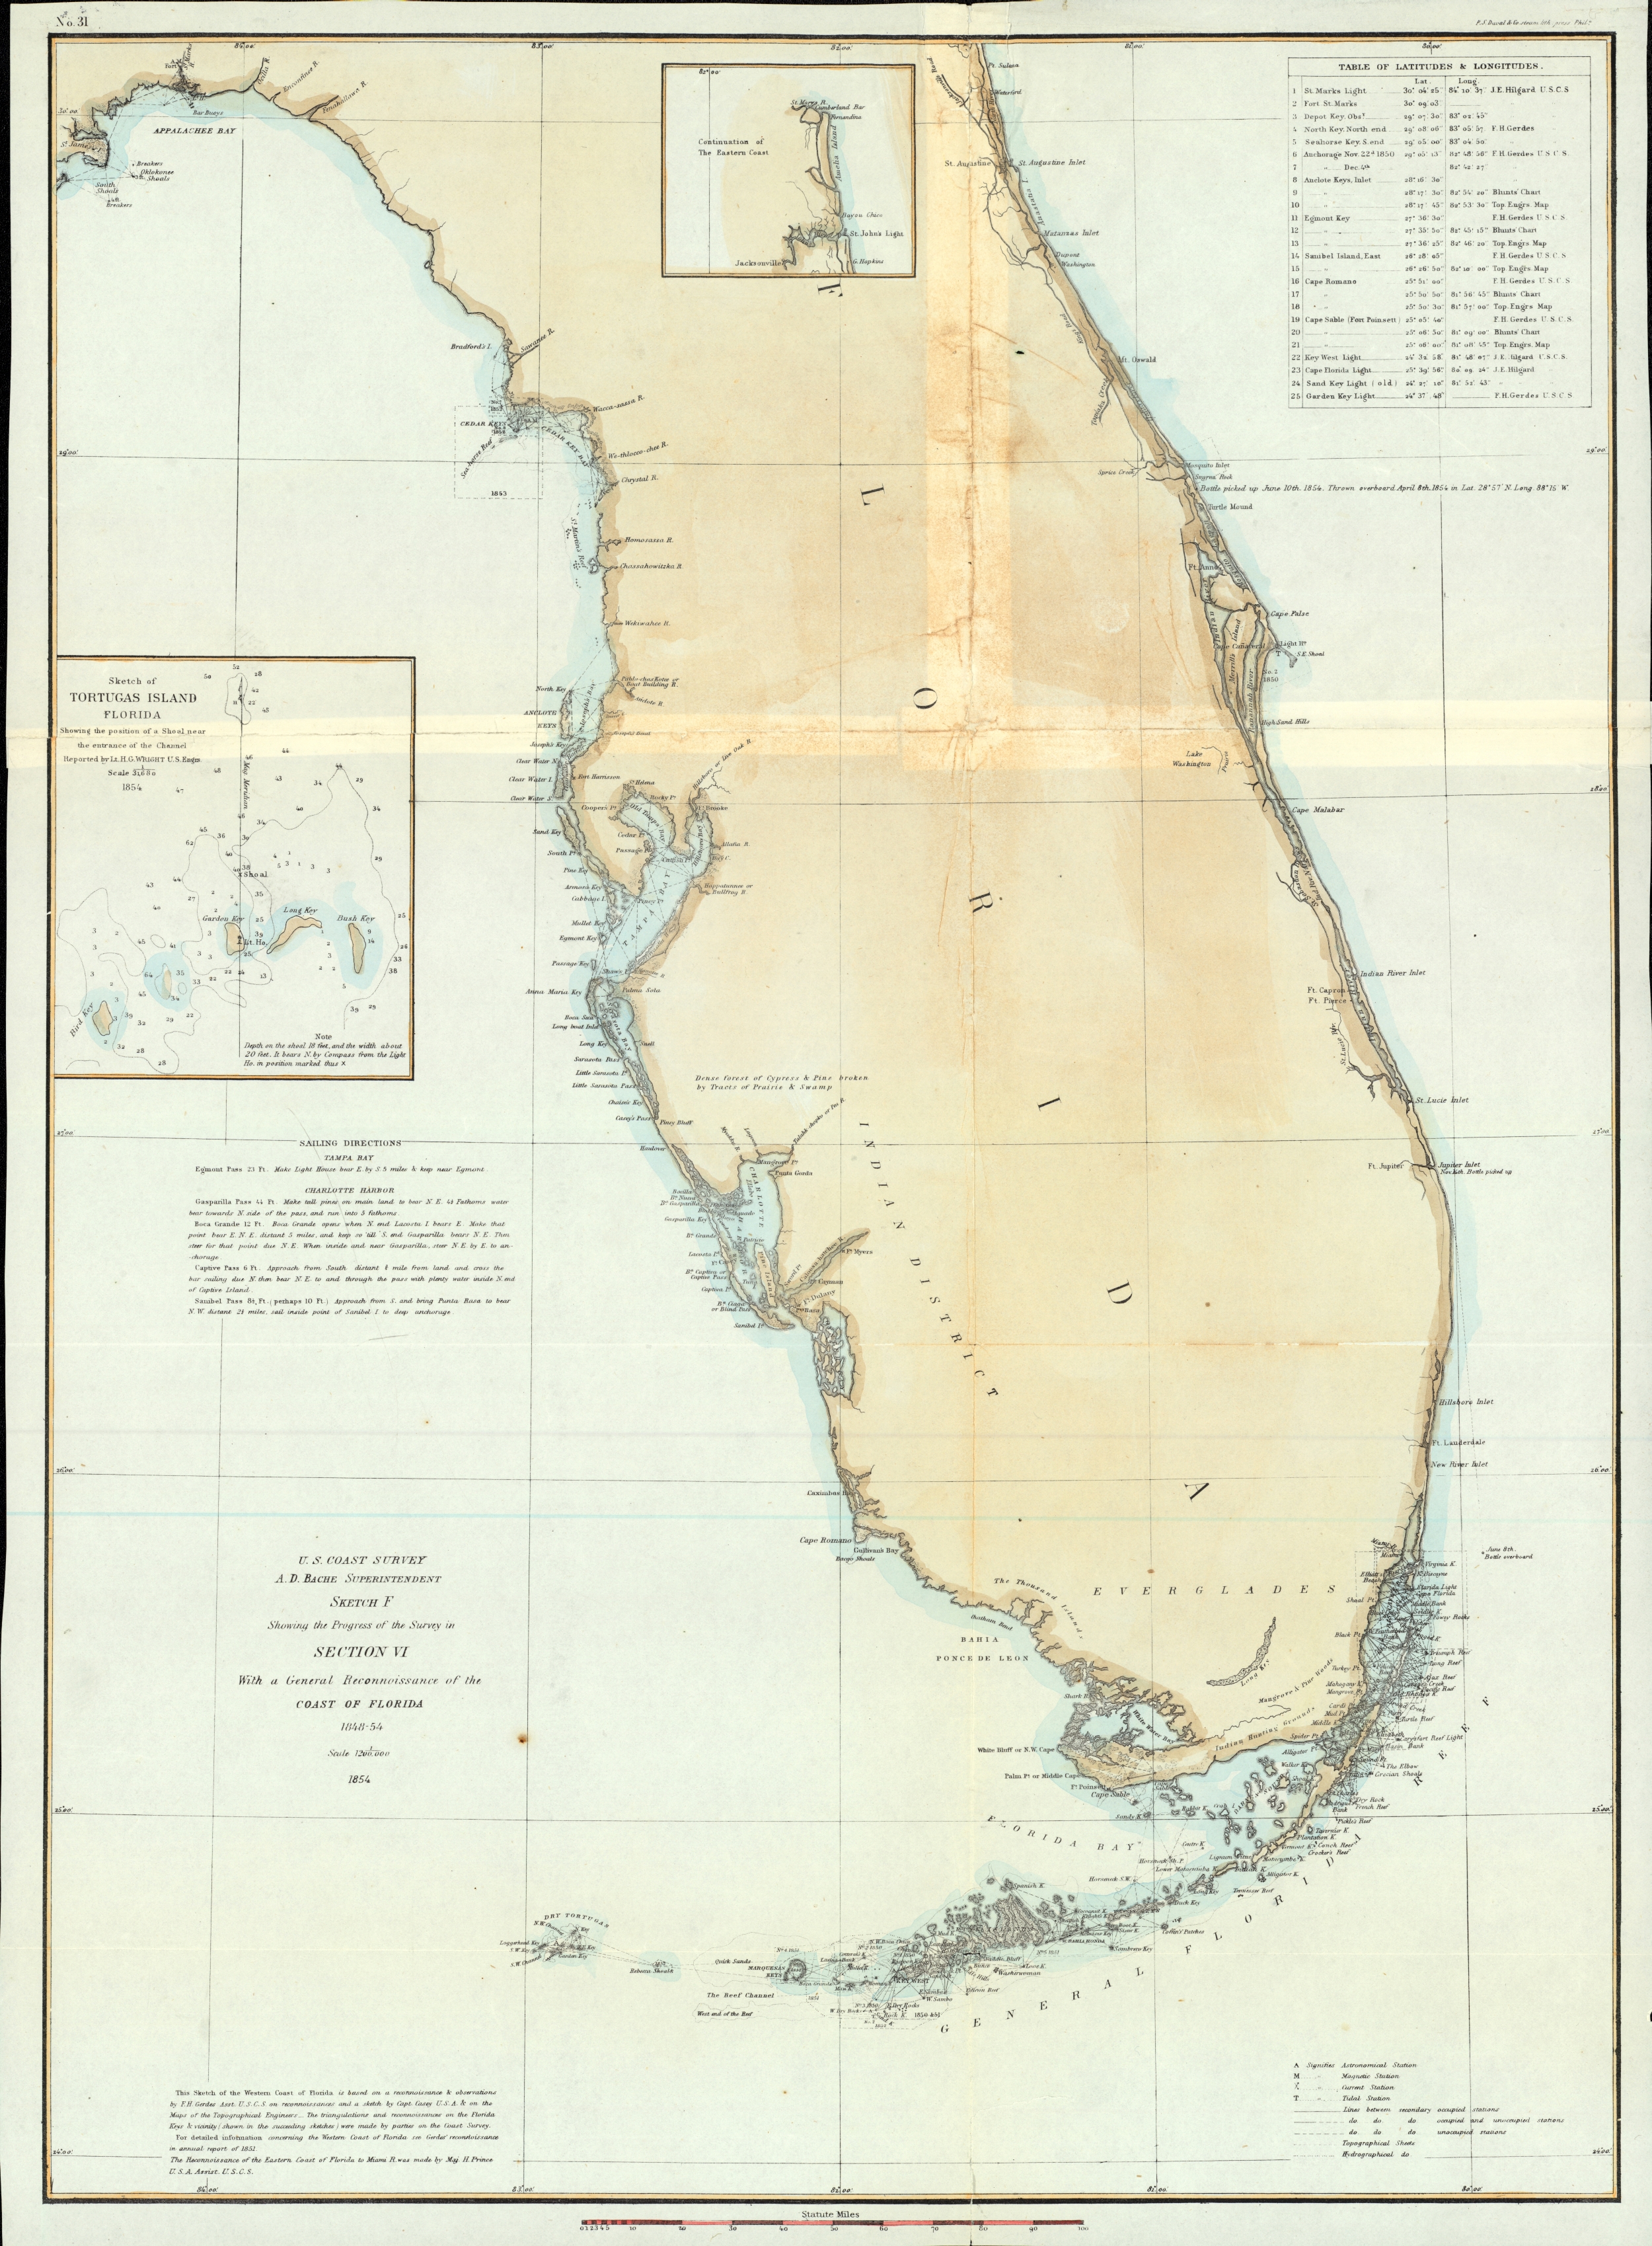 U.S. Coast Survey, Florida Peninsula, 1854